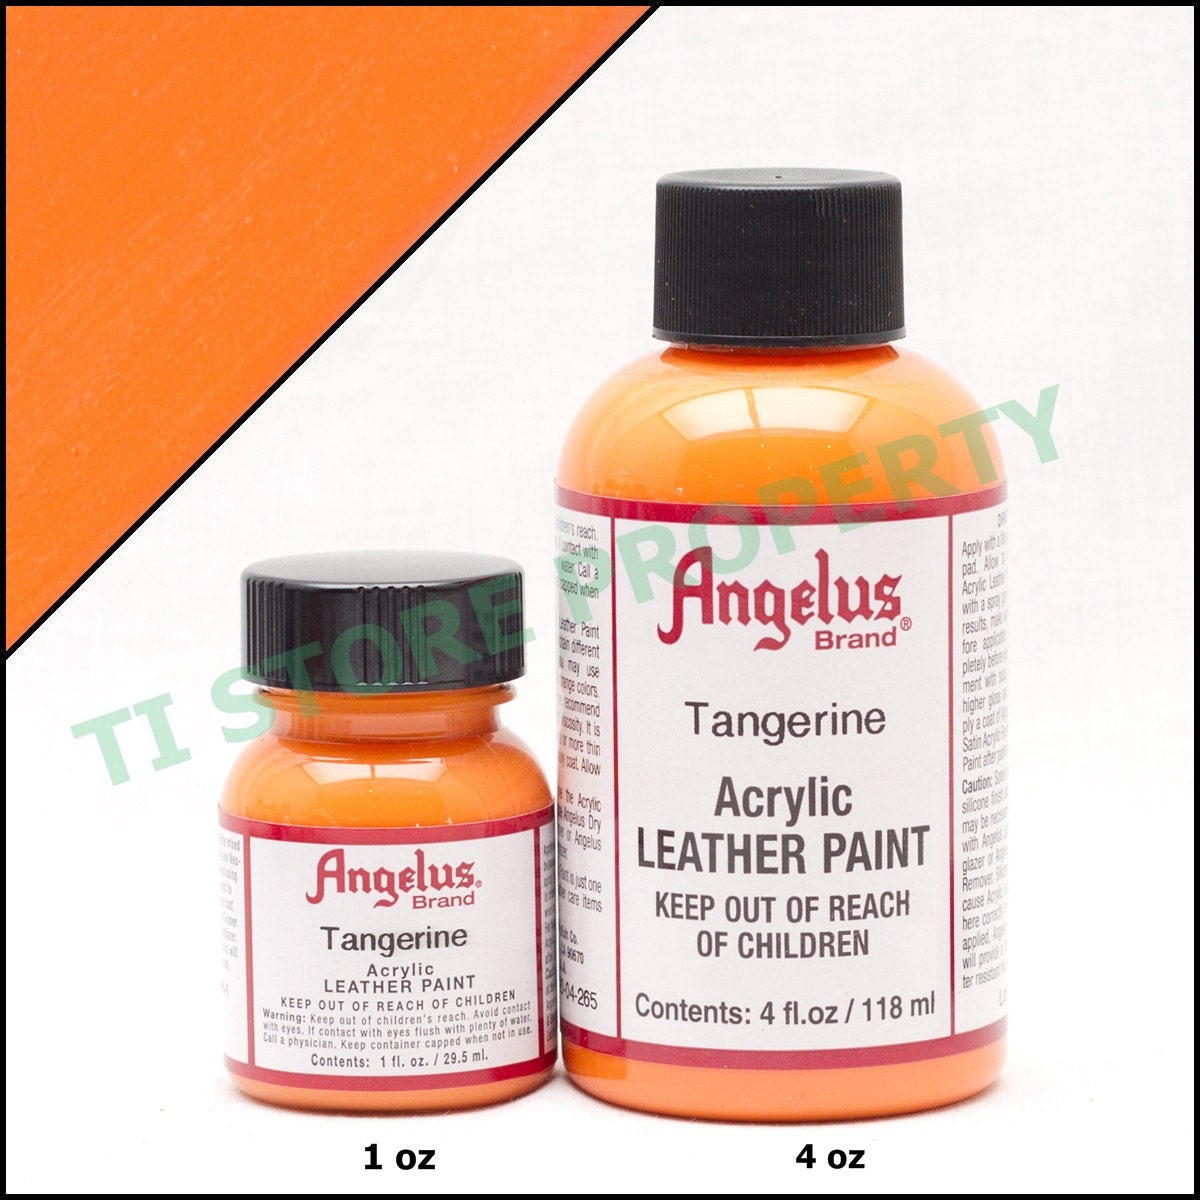 Angelus Brand 2-Thin Acrylic Leather Paint Thinner 4 oz